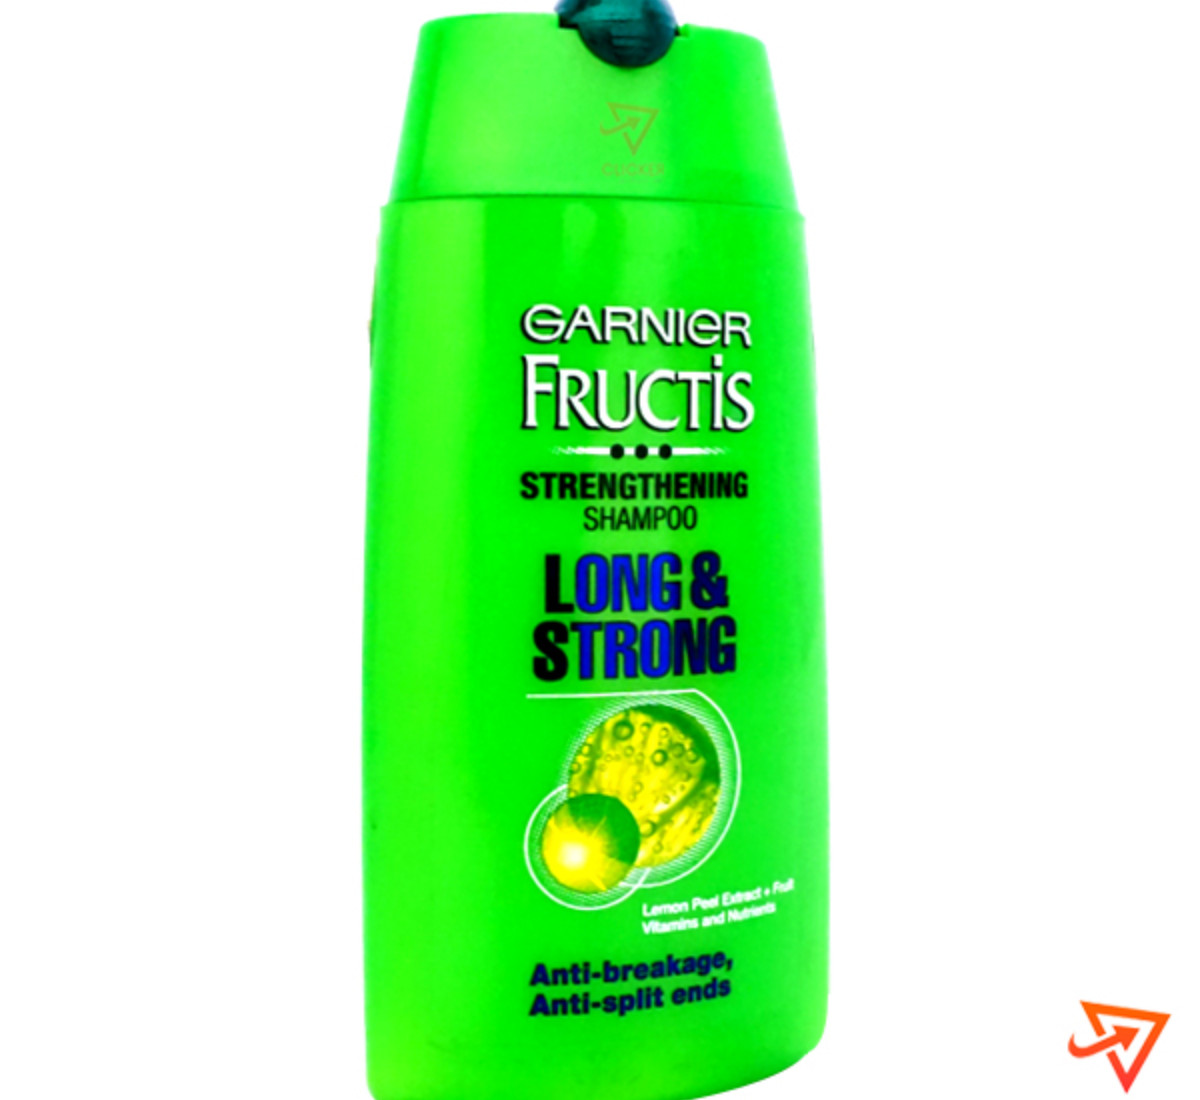 Clicker product 175ml GARNIER strengthering  shampoo 1073